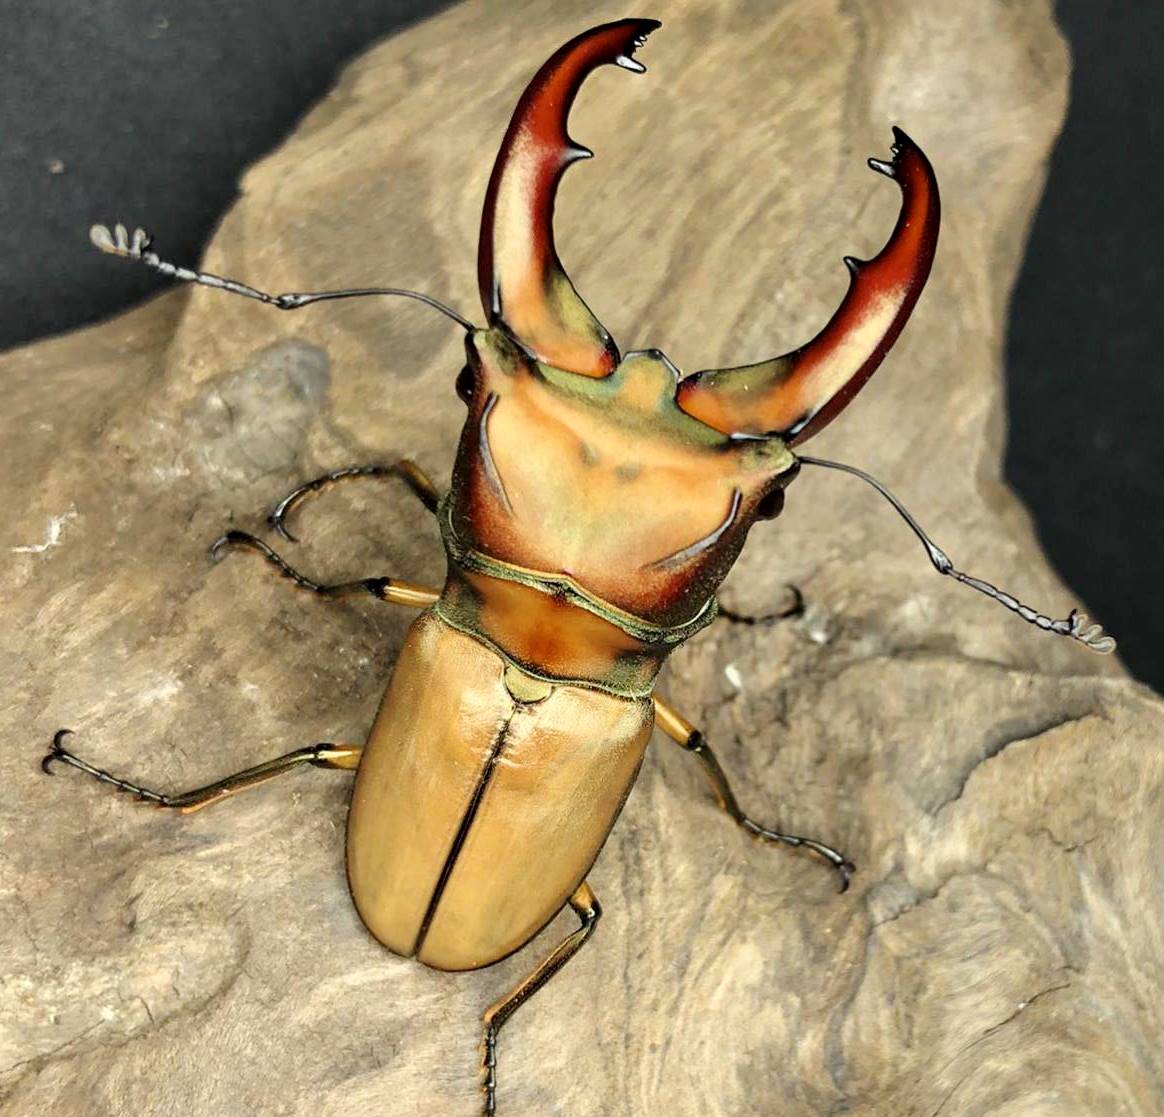 ⨂ Larvae - Taiwanese Stag Beetle, (Cyclommatus mniszechi)